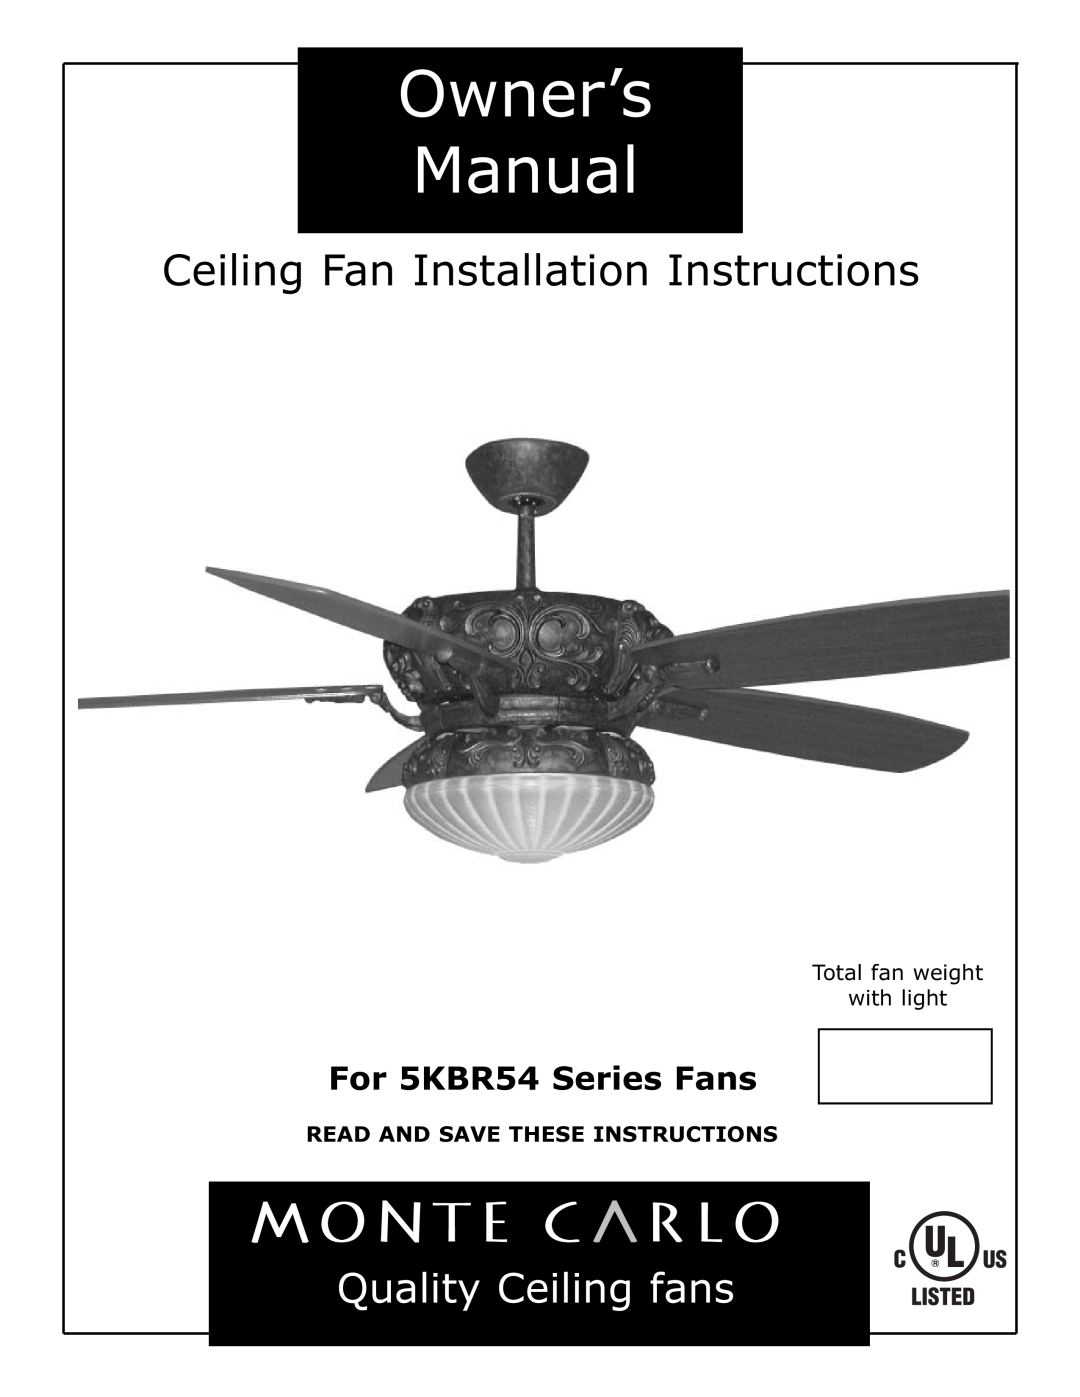 Monte Carlo Fan Company 5KBR54 owner manual Ceiling Fan Installation Instructions, Quality Ceiling fans 